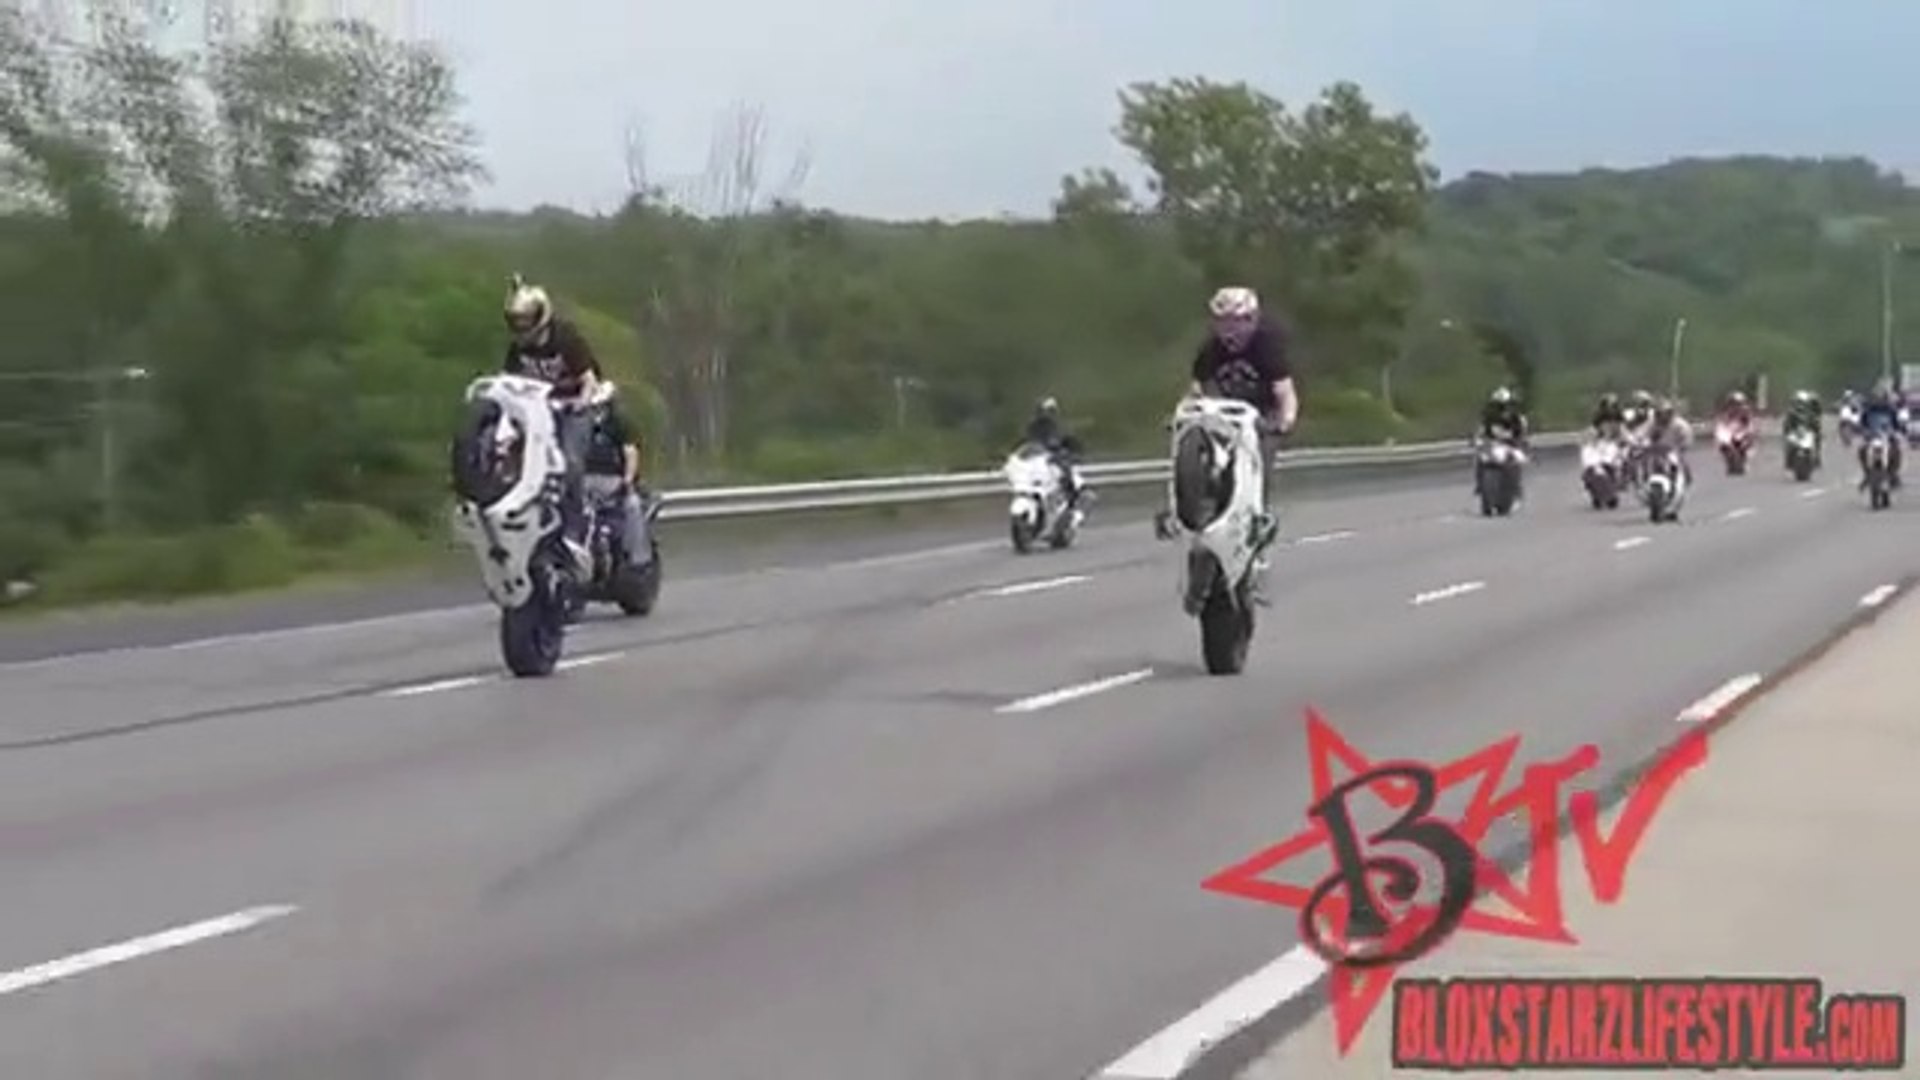 Motorcycle Crash Compilation Video 2014 Stunt Bike Crashes